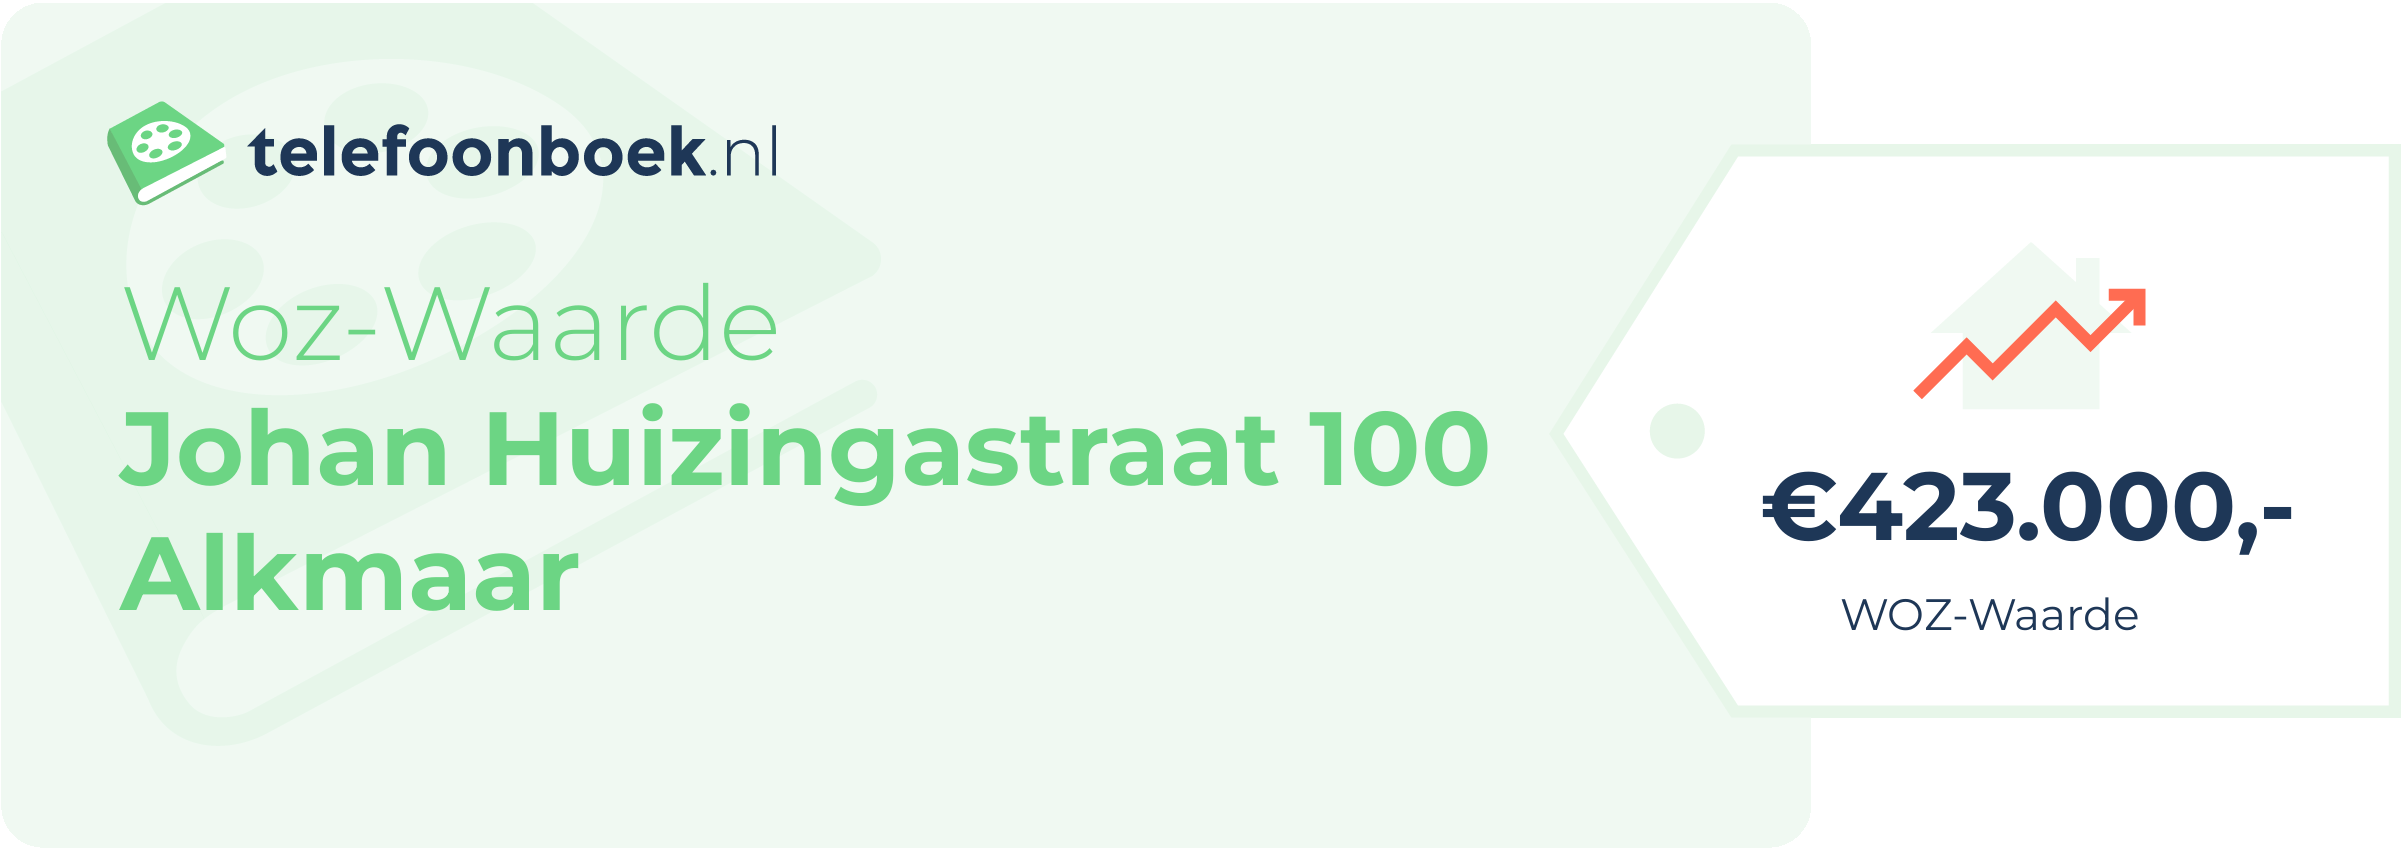 WOZ-waarde Johan Huizingastraat 100 Alkmaar